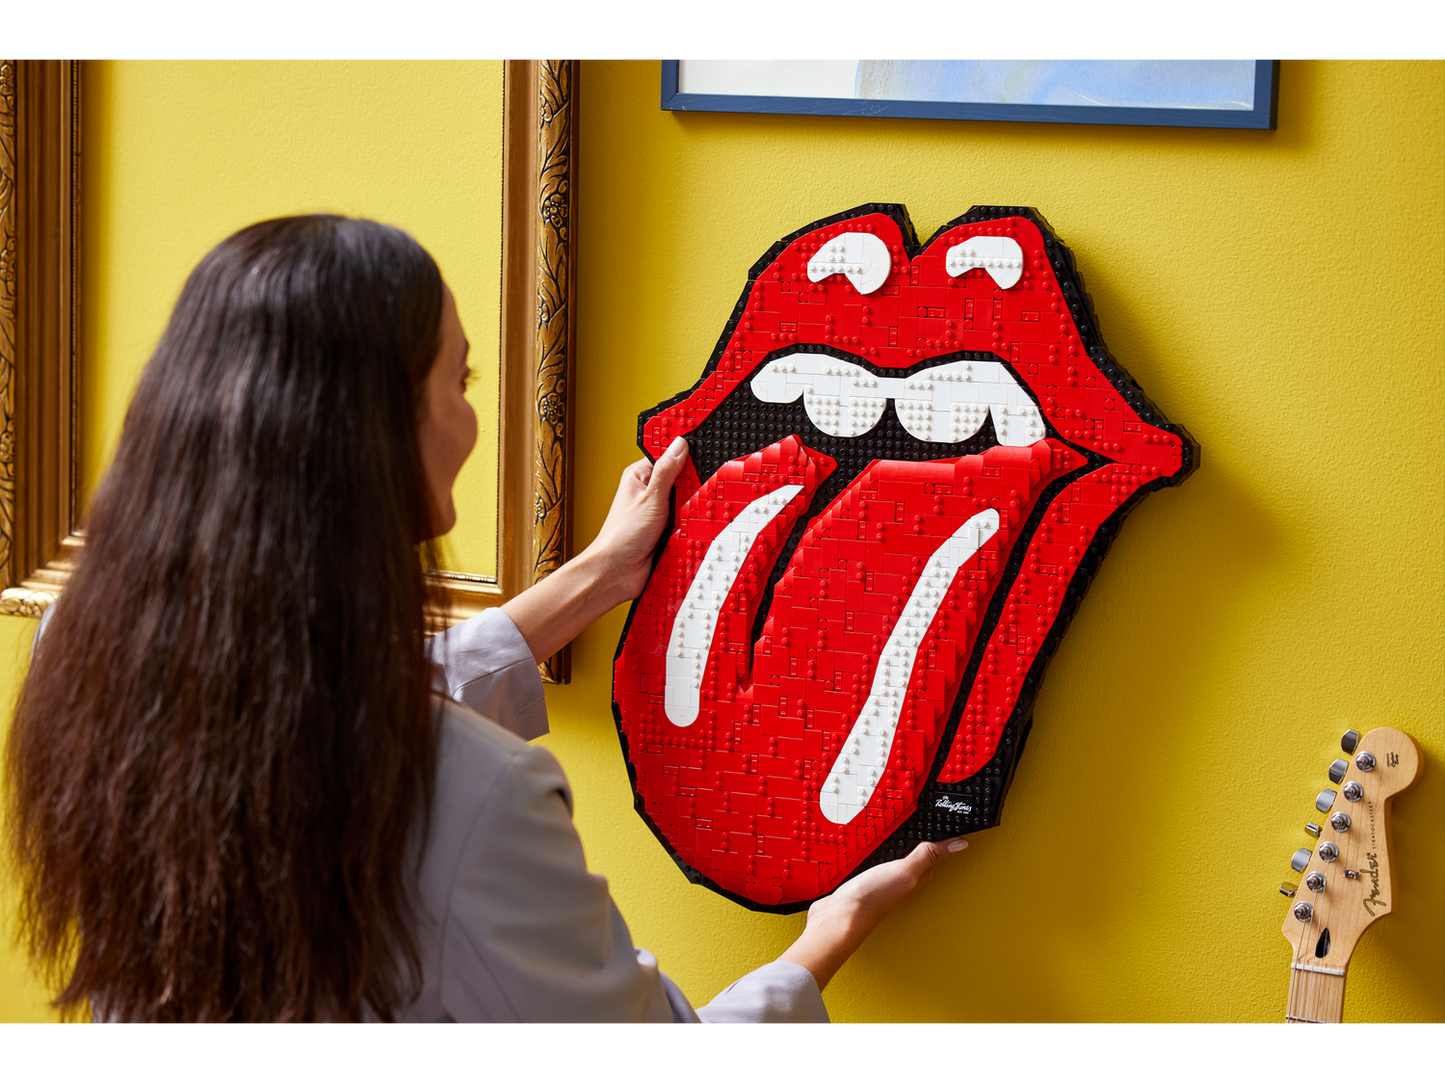 Art 31206 The Rolling Stones